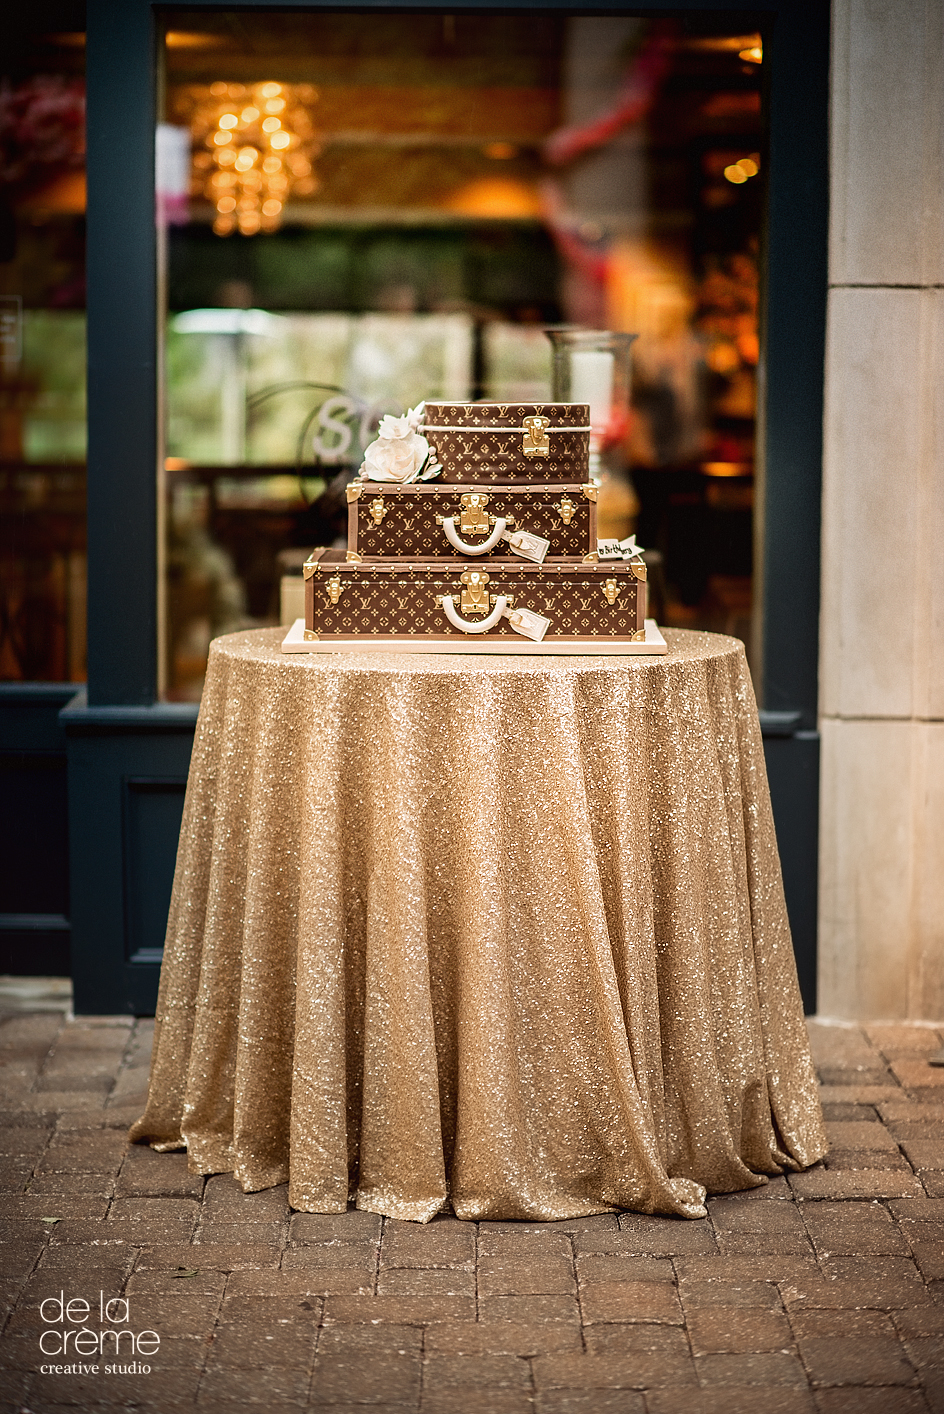 Louis Vuitton dessert table #sweettreatsbykv #desserttable  #louisvuittoncake #cakepops